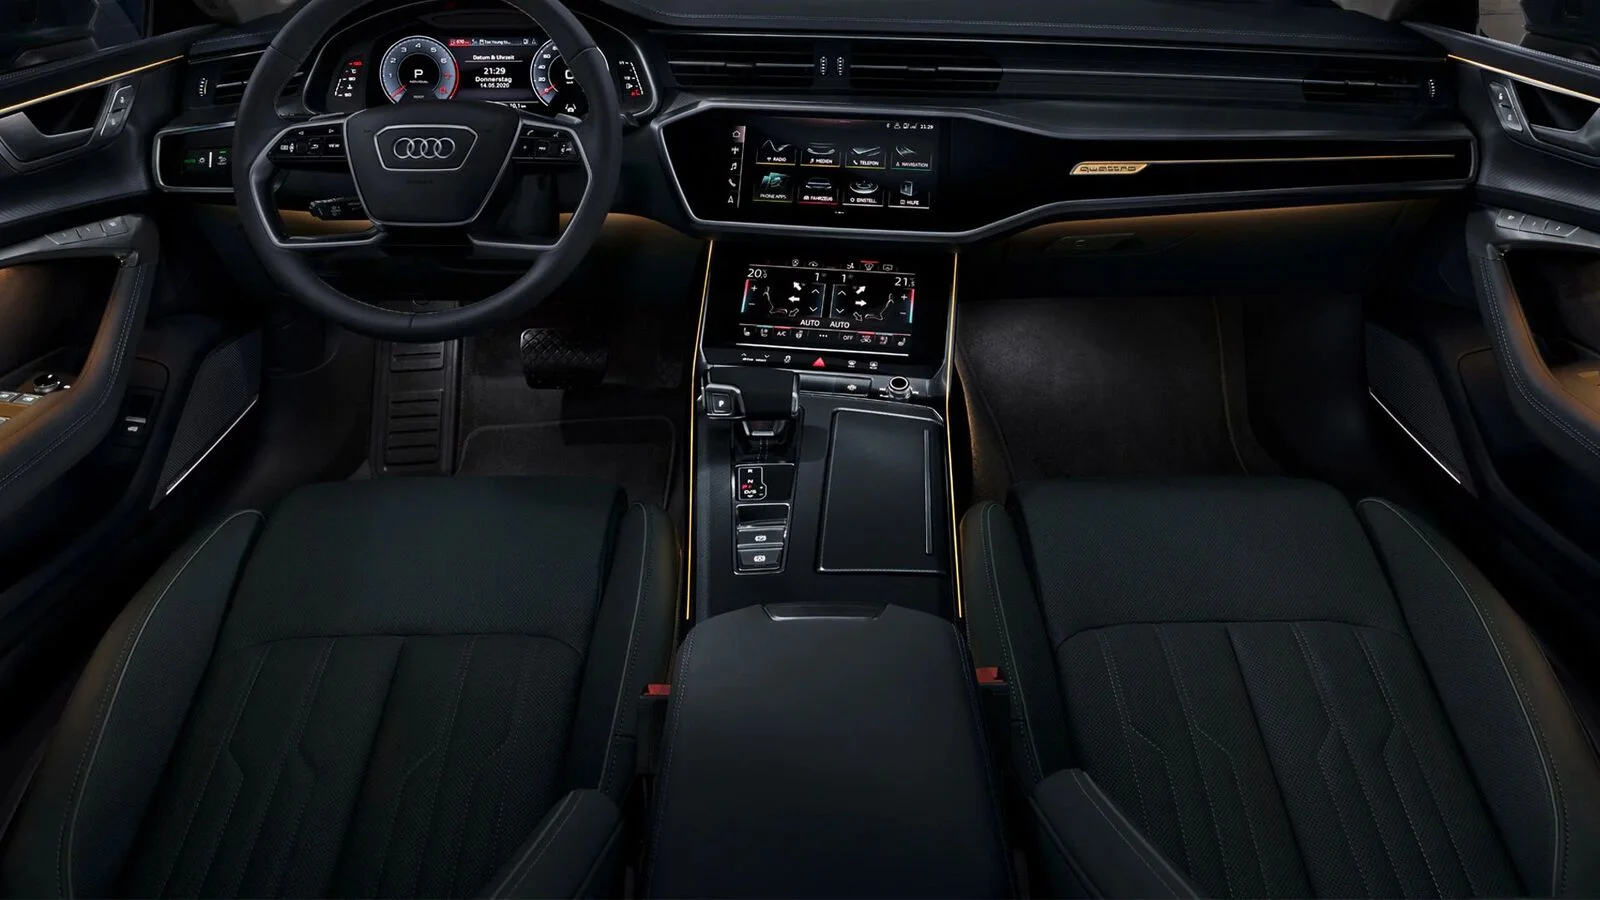 Audi Vincent A7 Sportback Interior